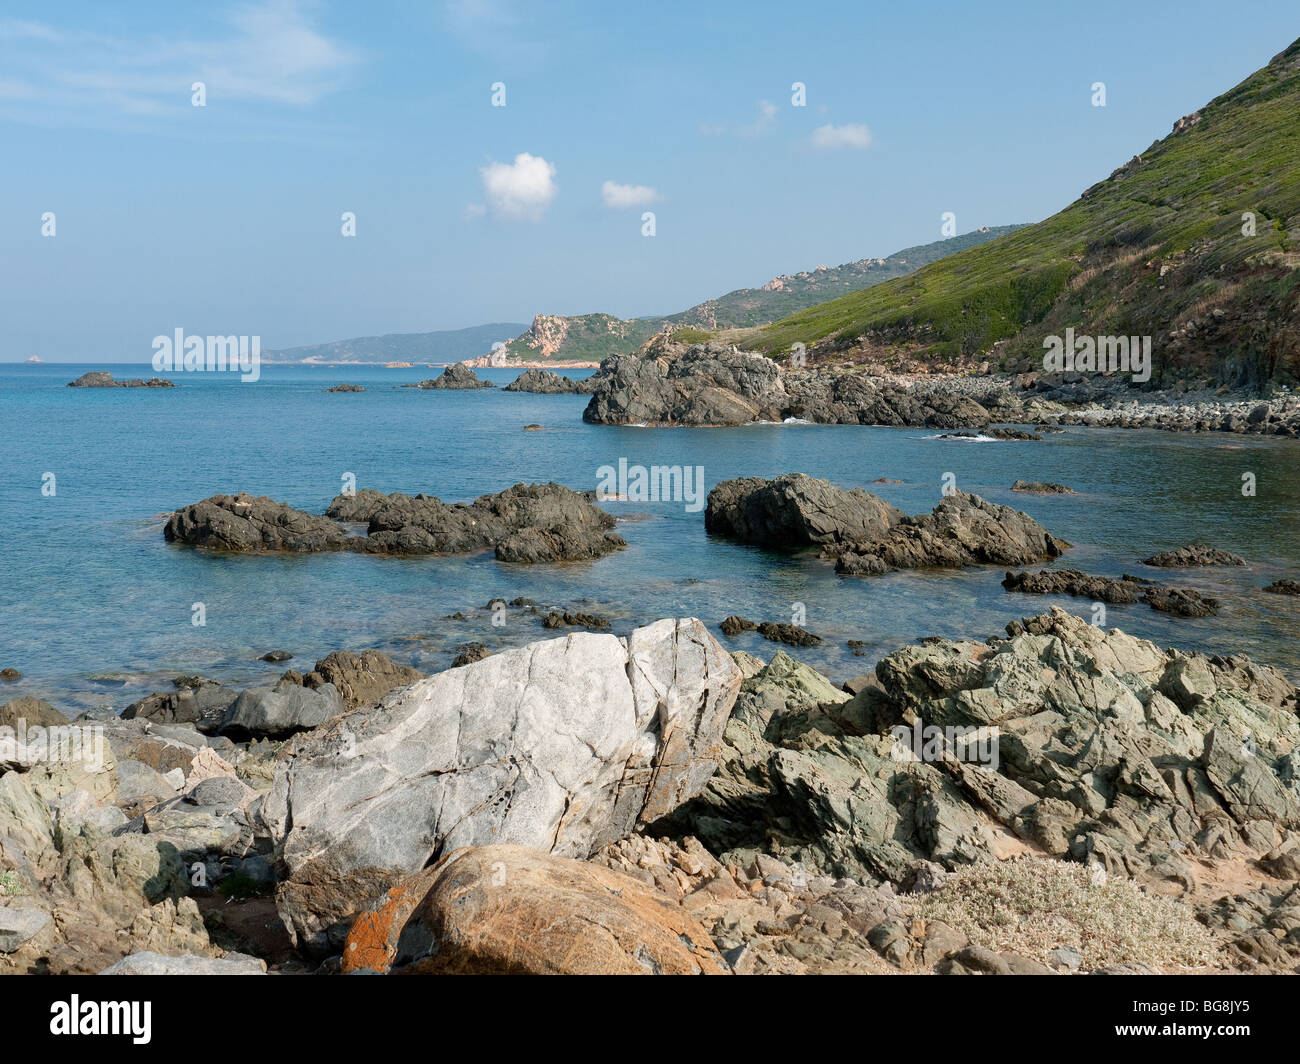 Coastal scene, Ajaccio, Corsica, France. Stock Photo